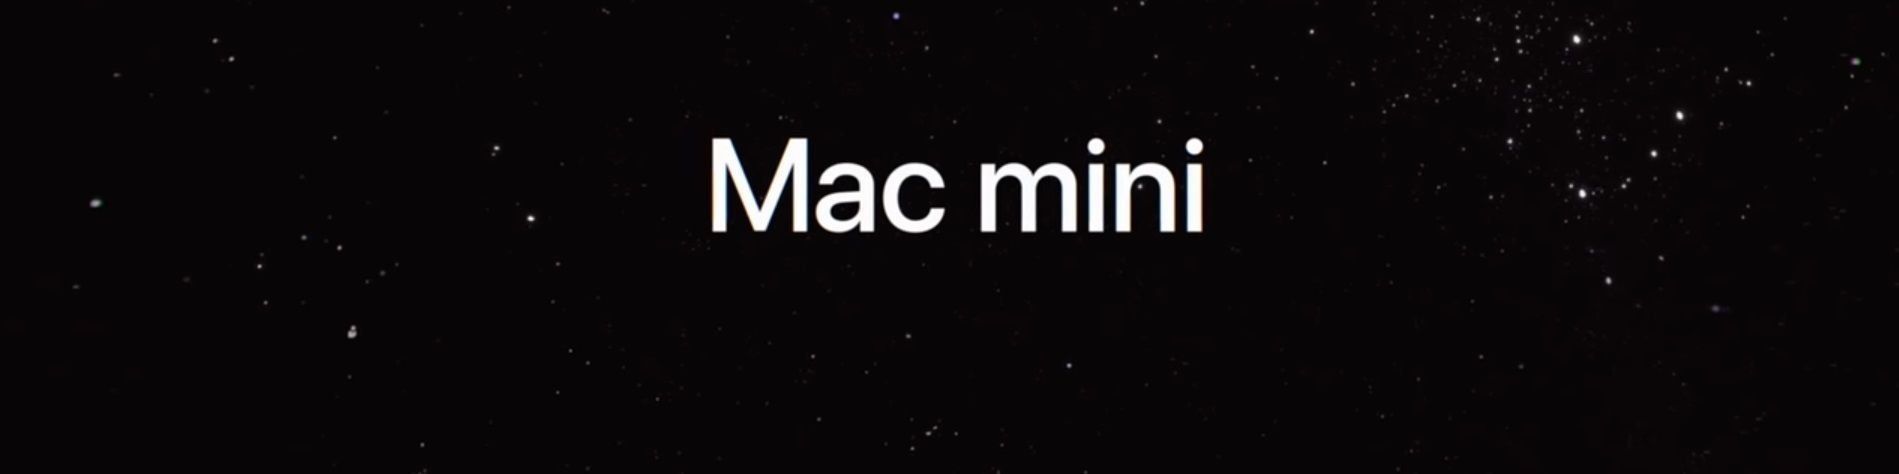 Apple Mac mini 2018 - advantages and disadvantages